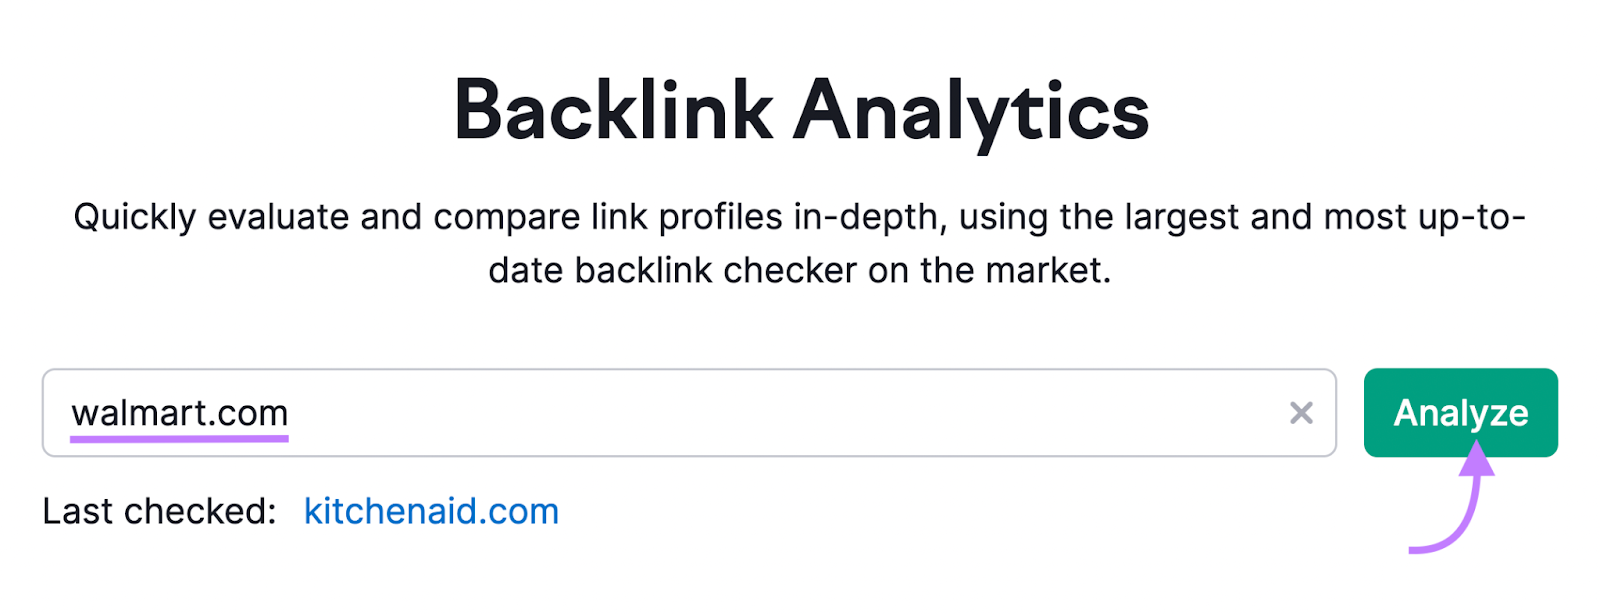 "walmart.com" entered into Backlink Analytics search bar